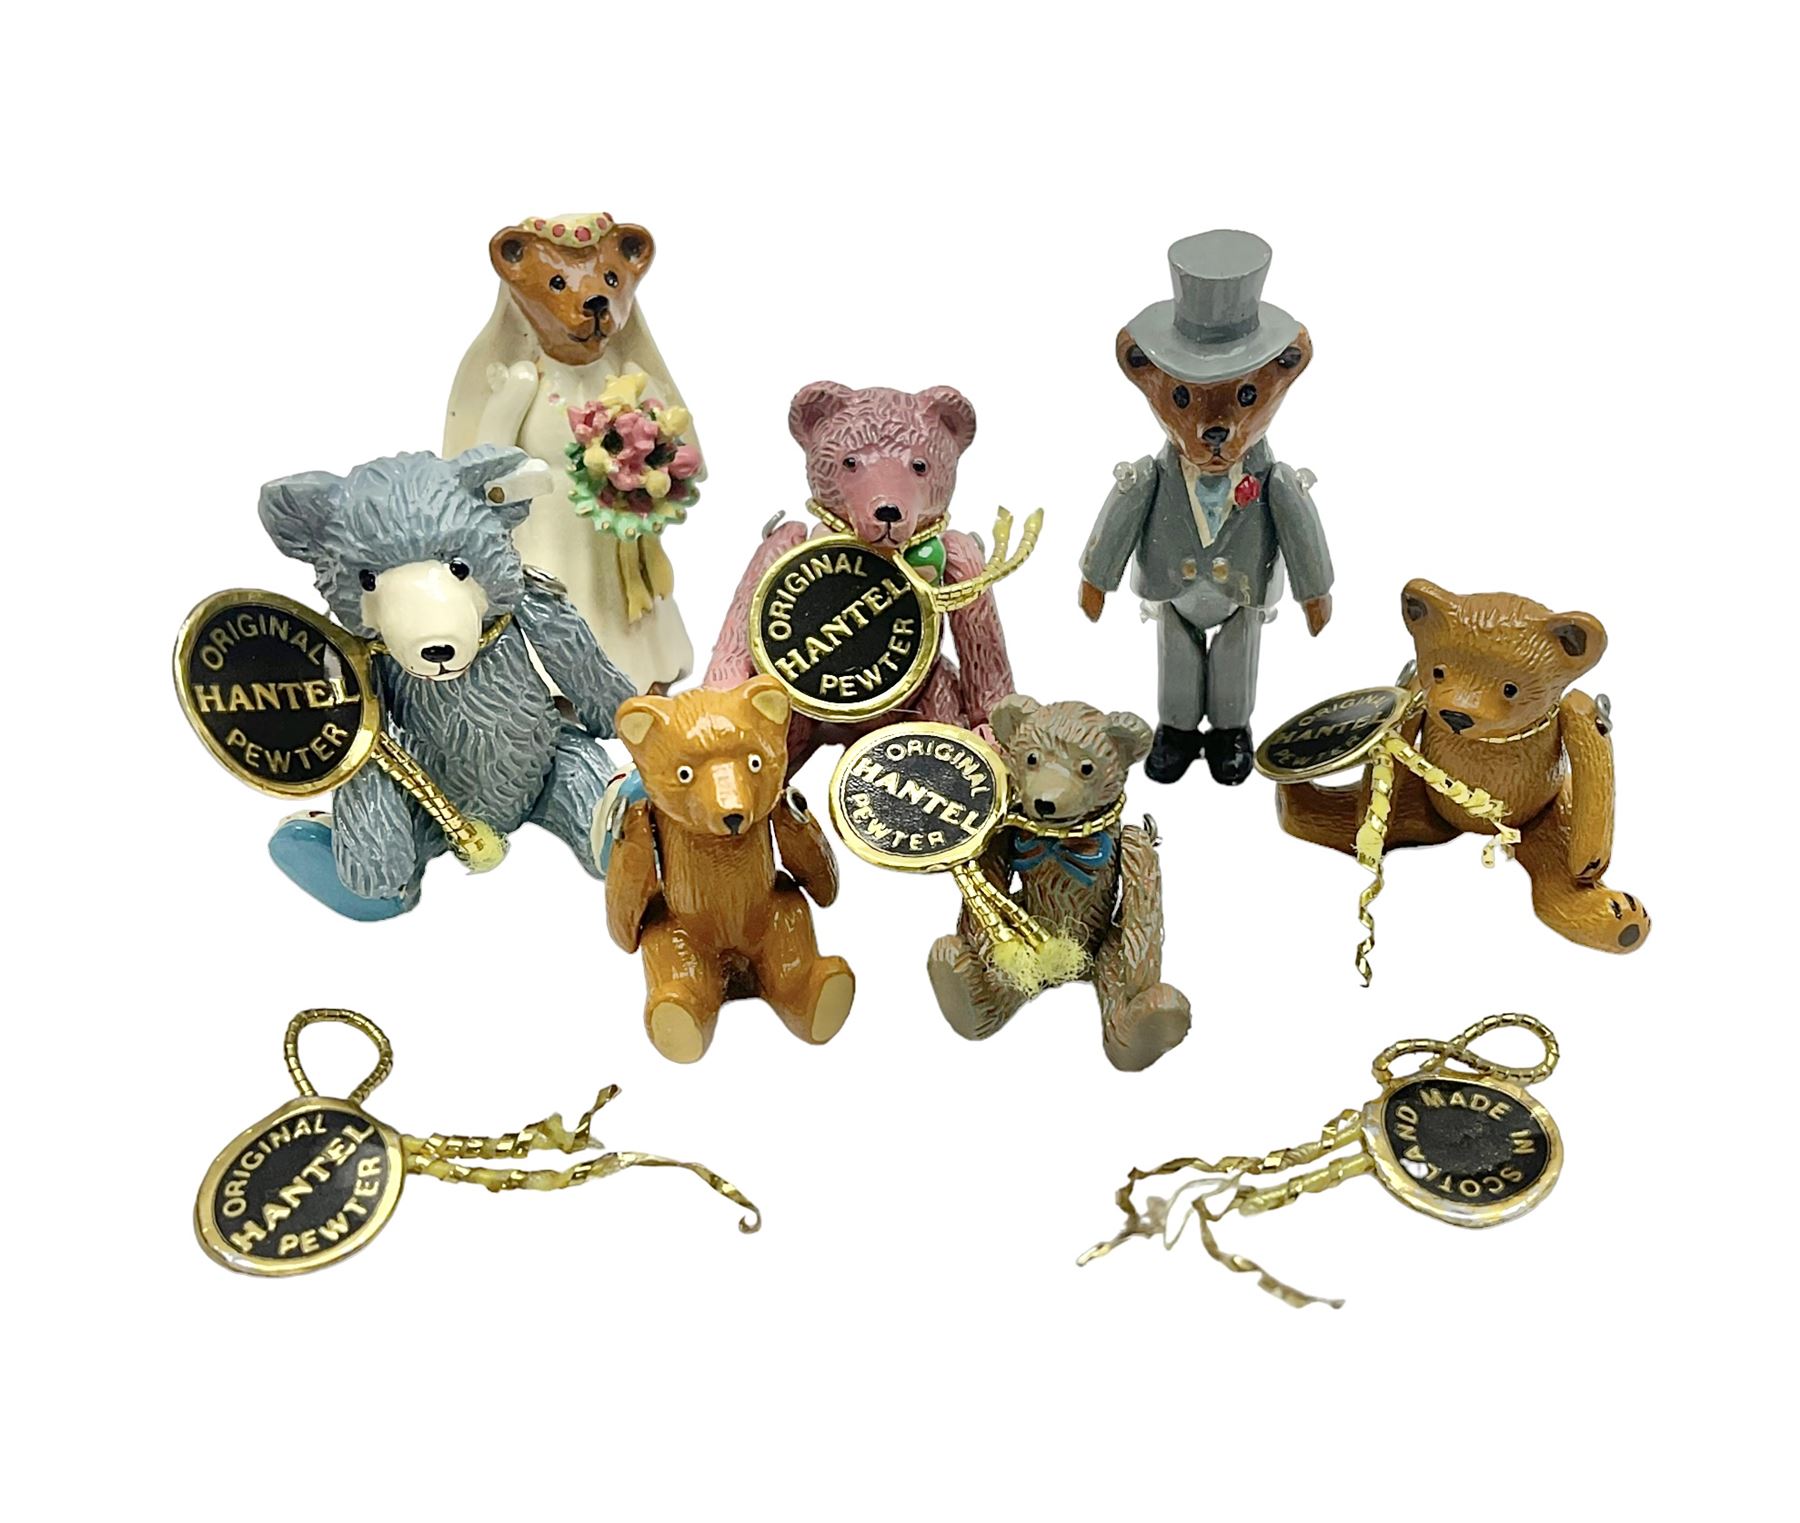 Seven Hantel miniature articulated pewter teddy bears